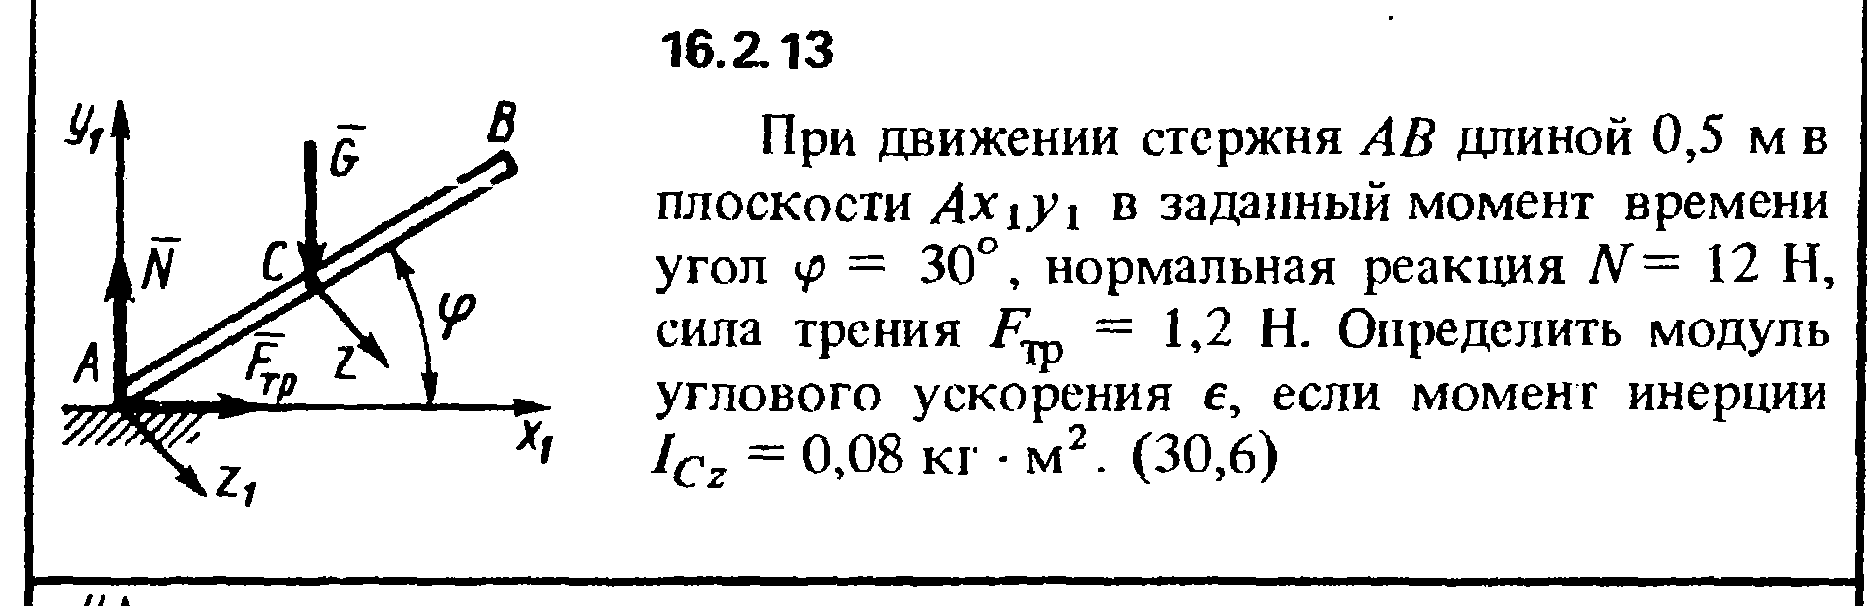 Решение задачи 16.2.13 из сборника Кепе О.Е. 1989 года